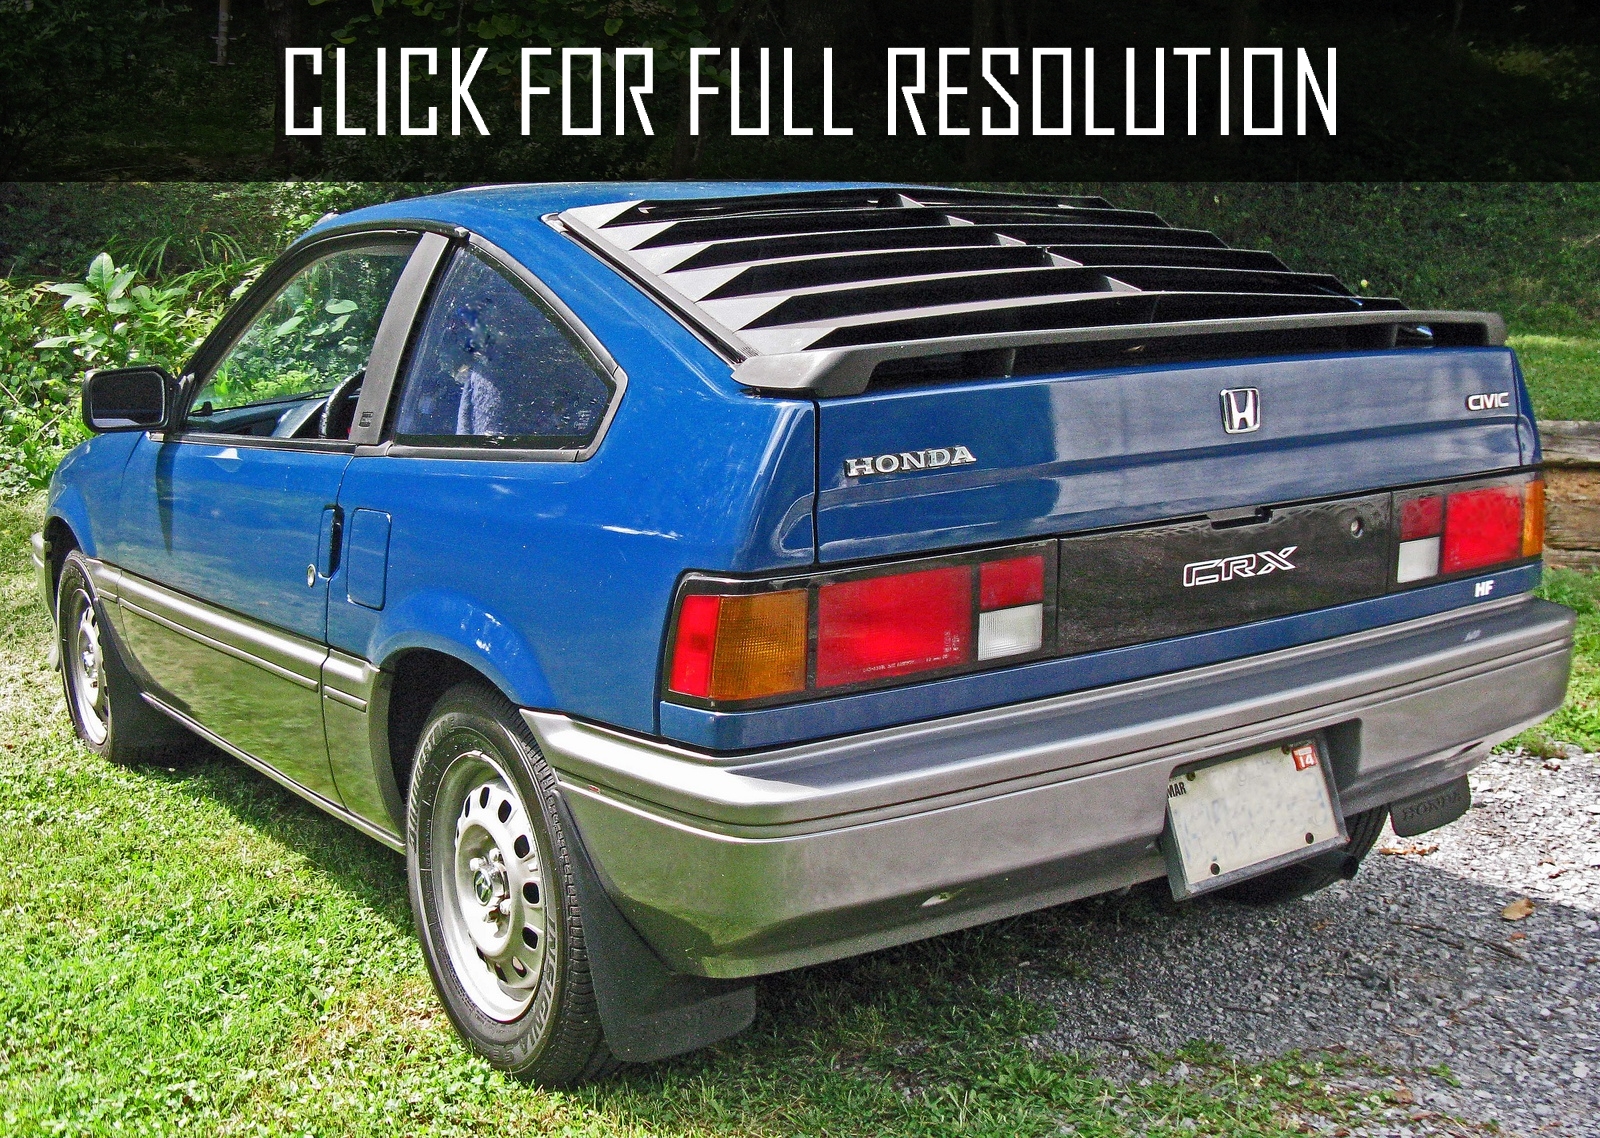 Honda Crx 1985